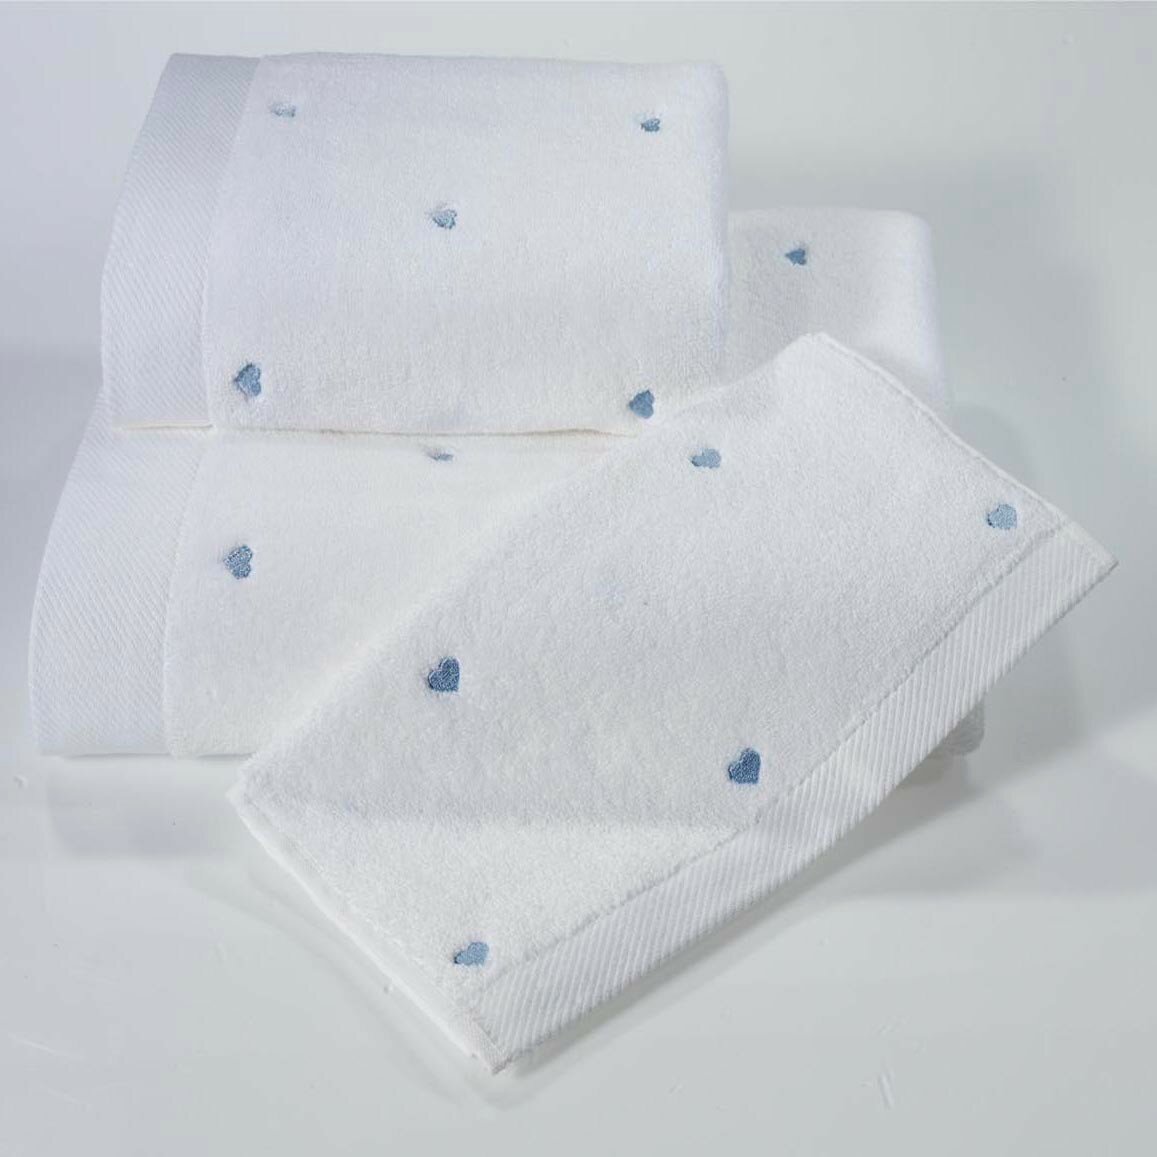 Soft cotton Полотенце Adelia цвет: белый, голубой (50х100 см)